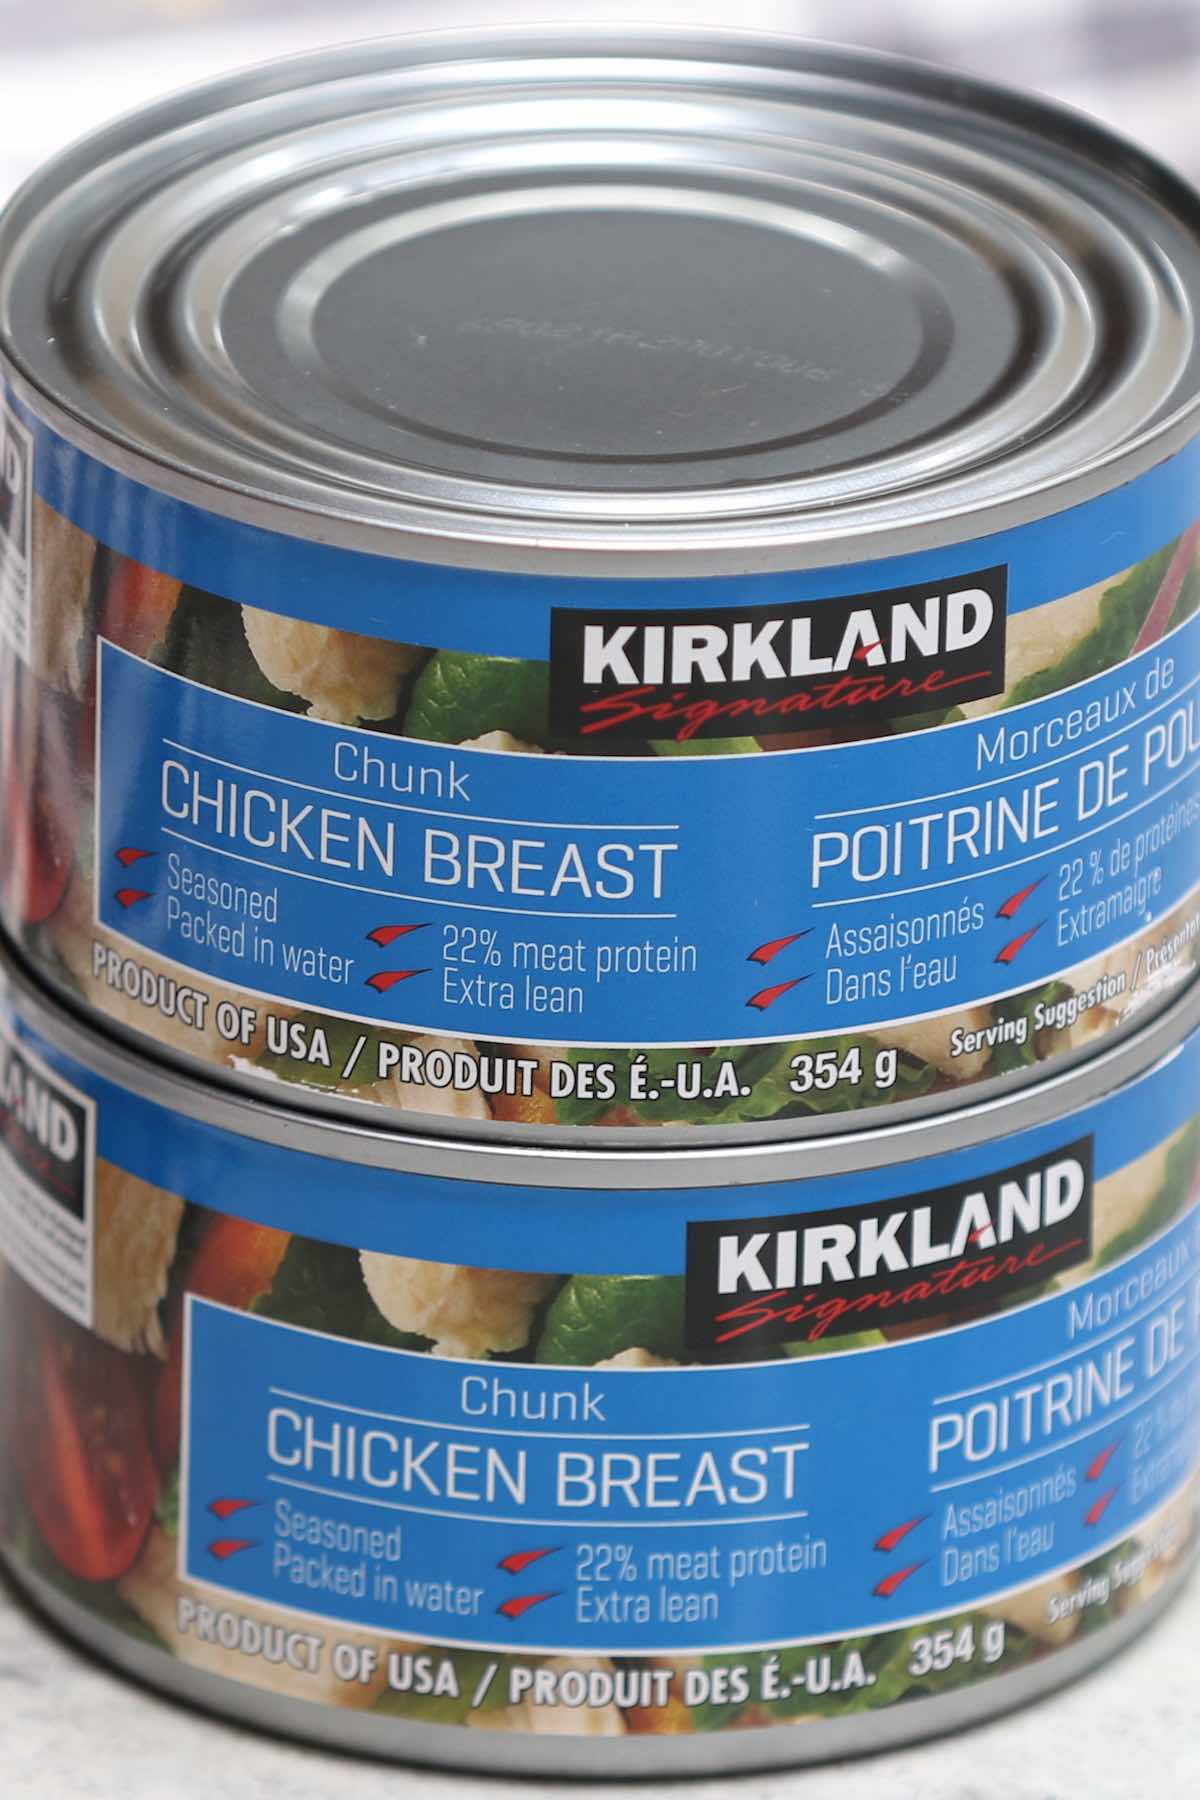 Canned Chicken Brand: Kirkland